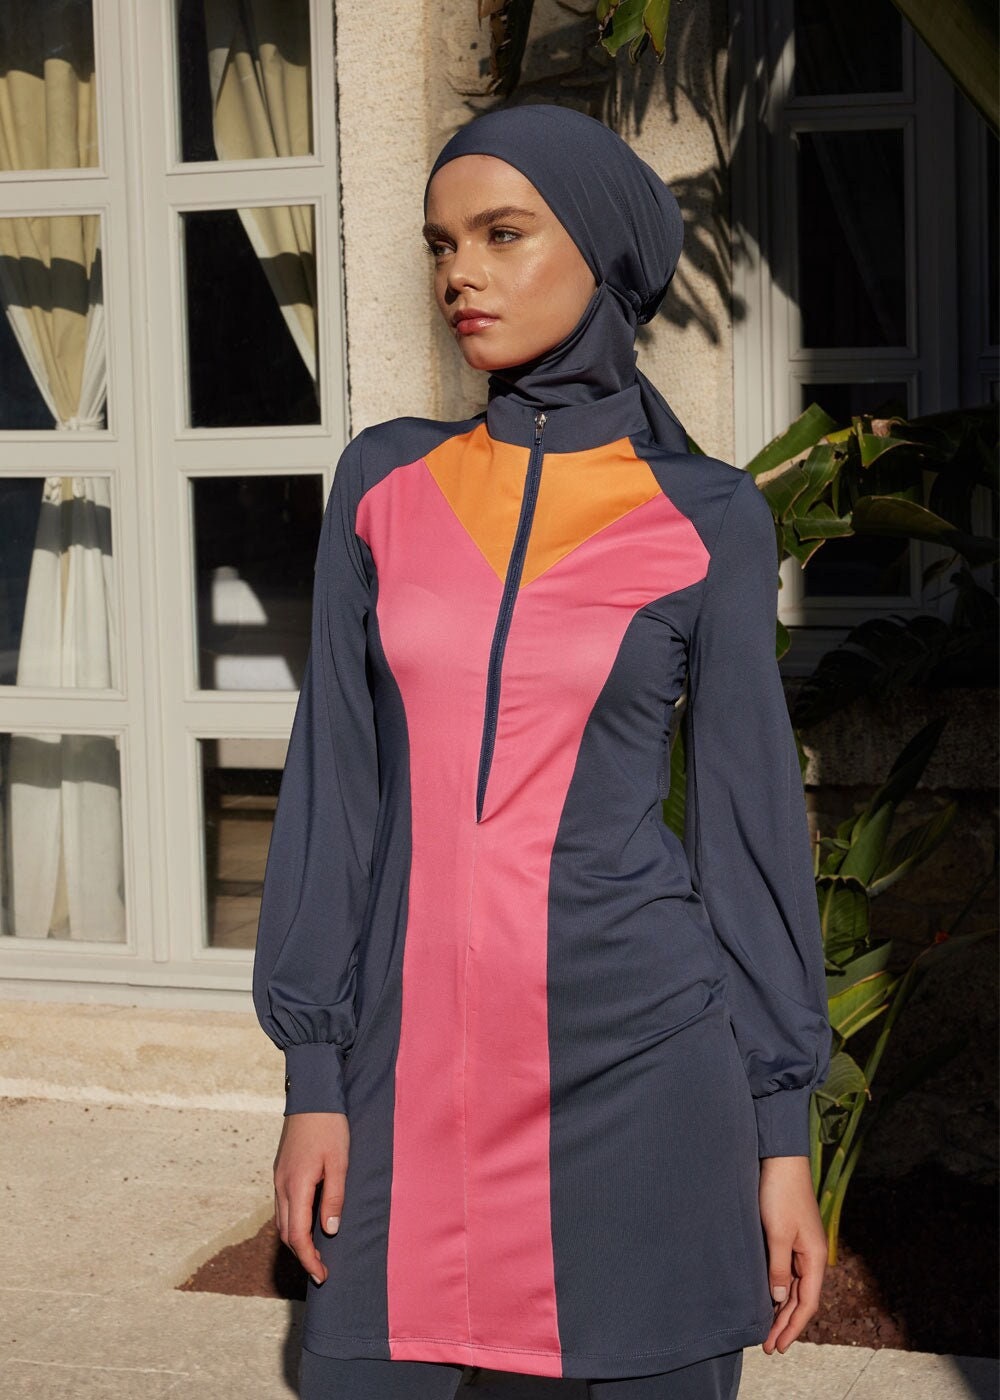 Muslim Women High Elasticity Sportswear Islamic Short Sleeve Bathing Suit  Swimwear - China Baju Renang and Muslim Wear price